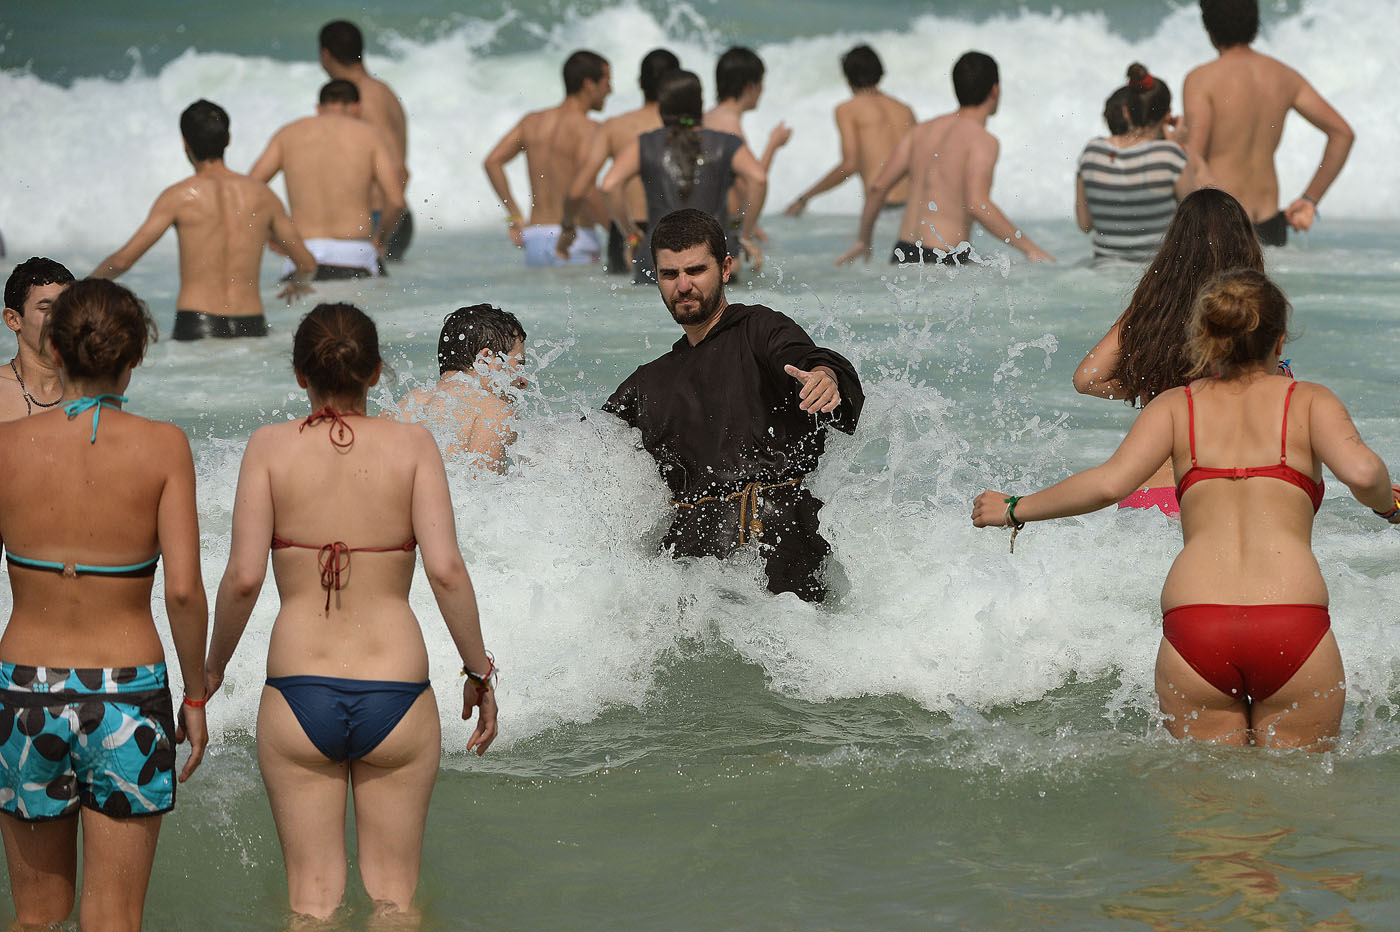 El monje bañista de Copacabana (Fotos)